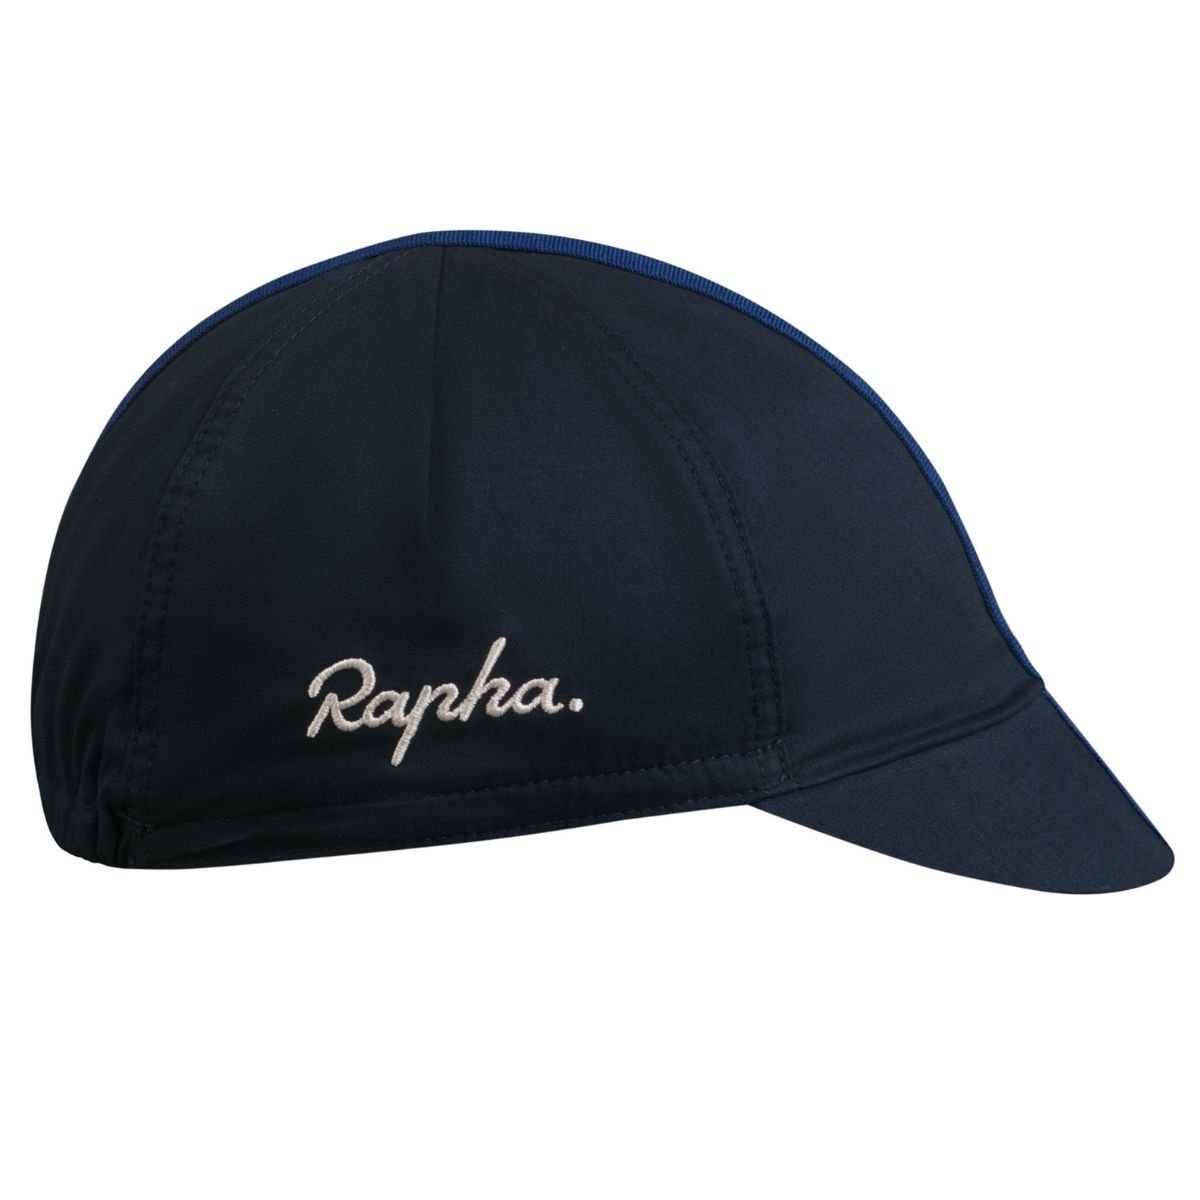 Rapha II Cap